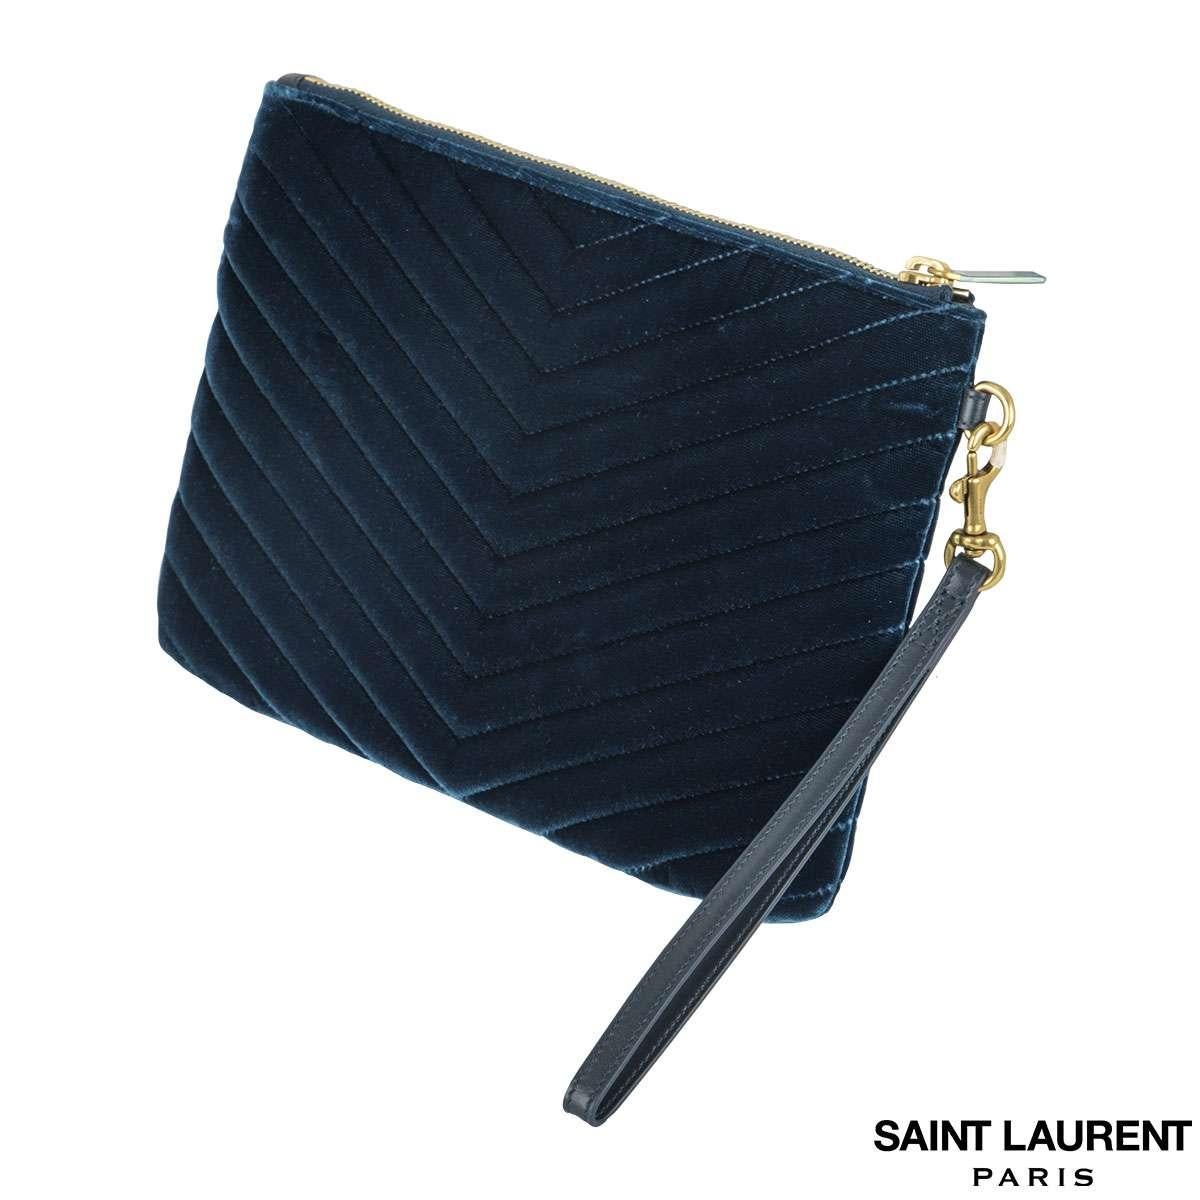 Yves Saint Laurent Velvet Chevron Clutch In New Condition For Sale In London, GB